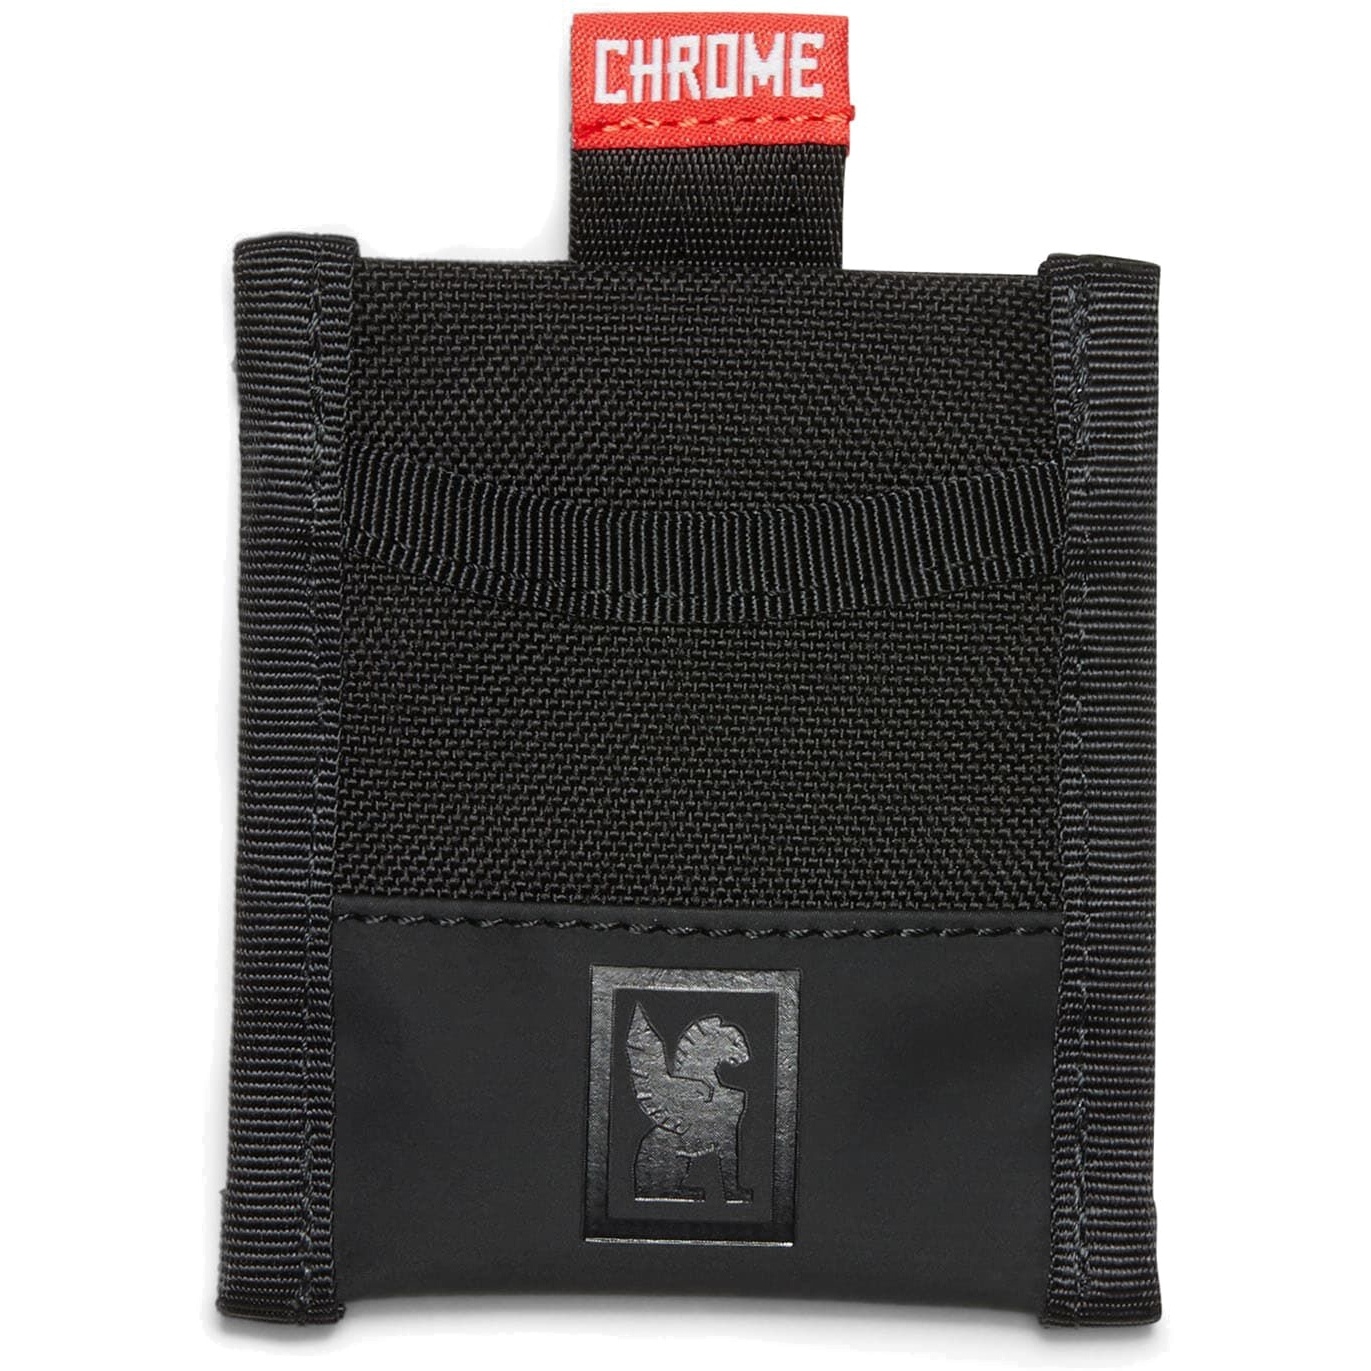 Produktbild von CHROME Cheapskate Card Wallet Portemonnaie - Black / Black